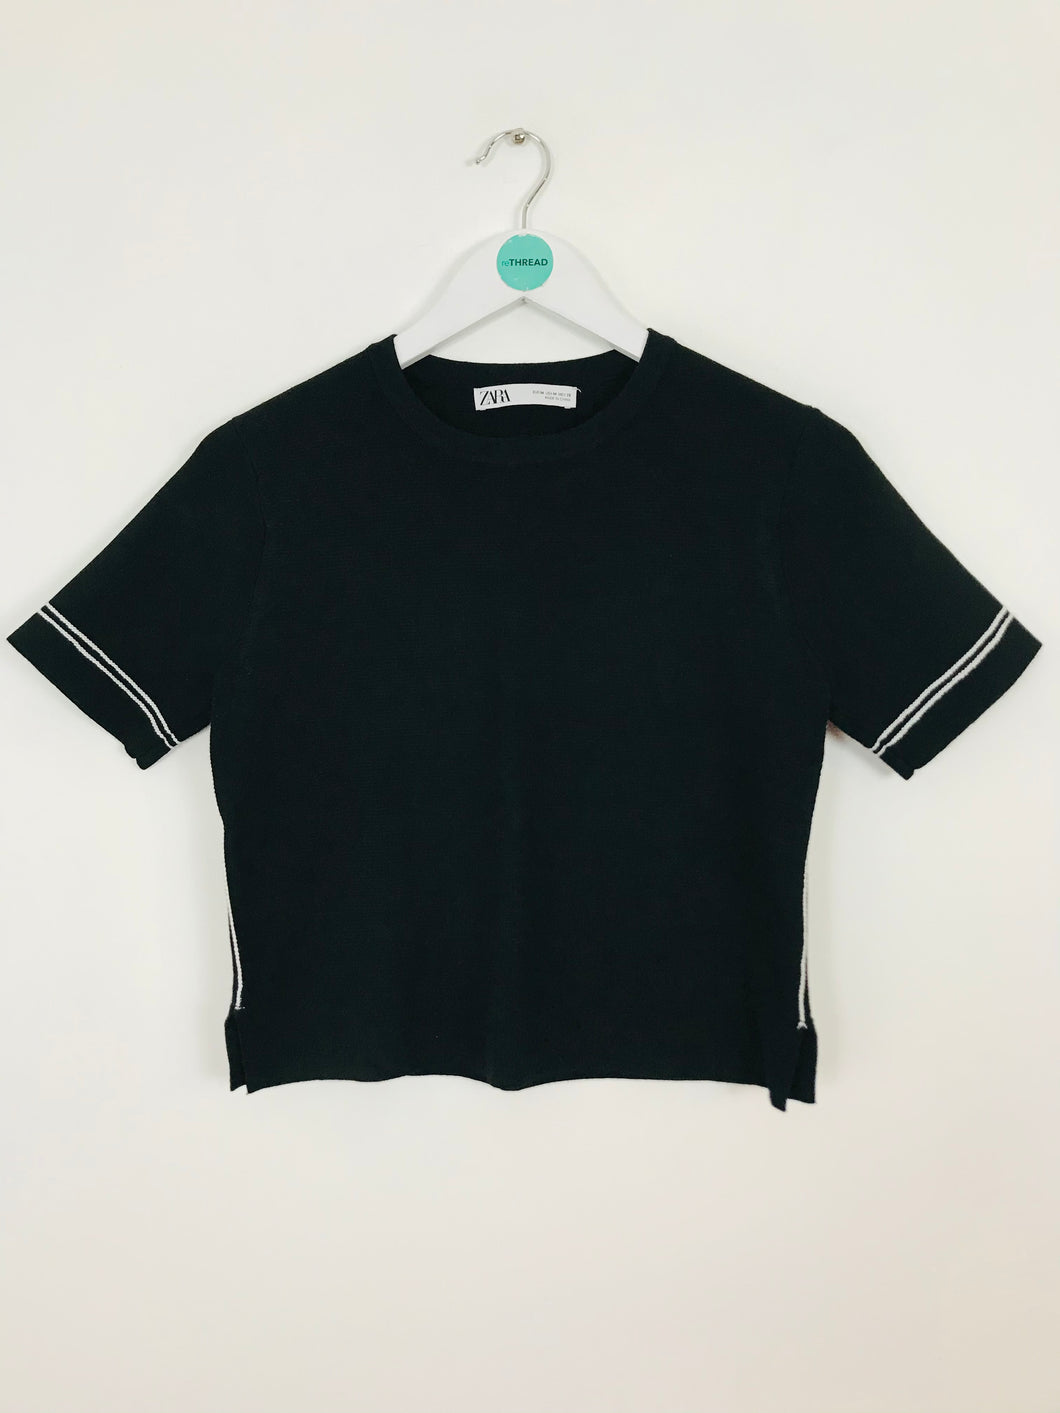 Zara Women’s Short Sleeve Crop Knit Top | M | Black